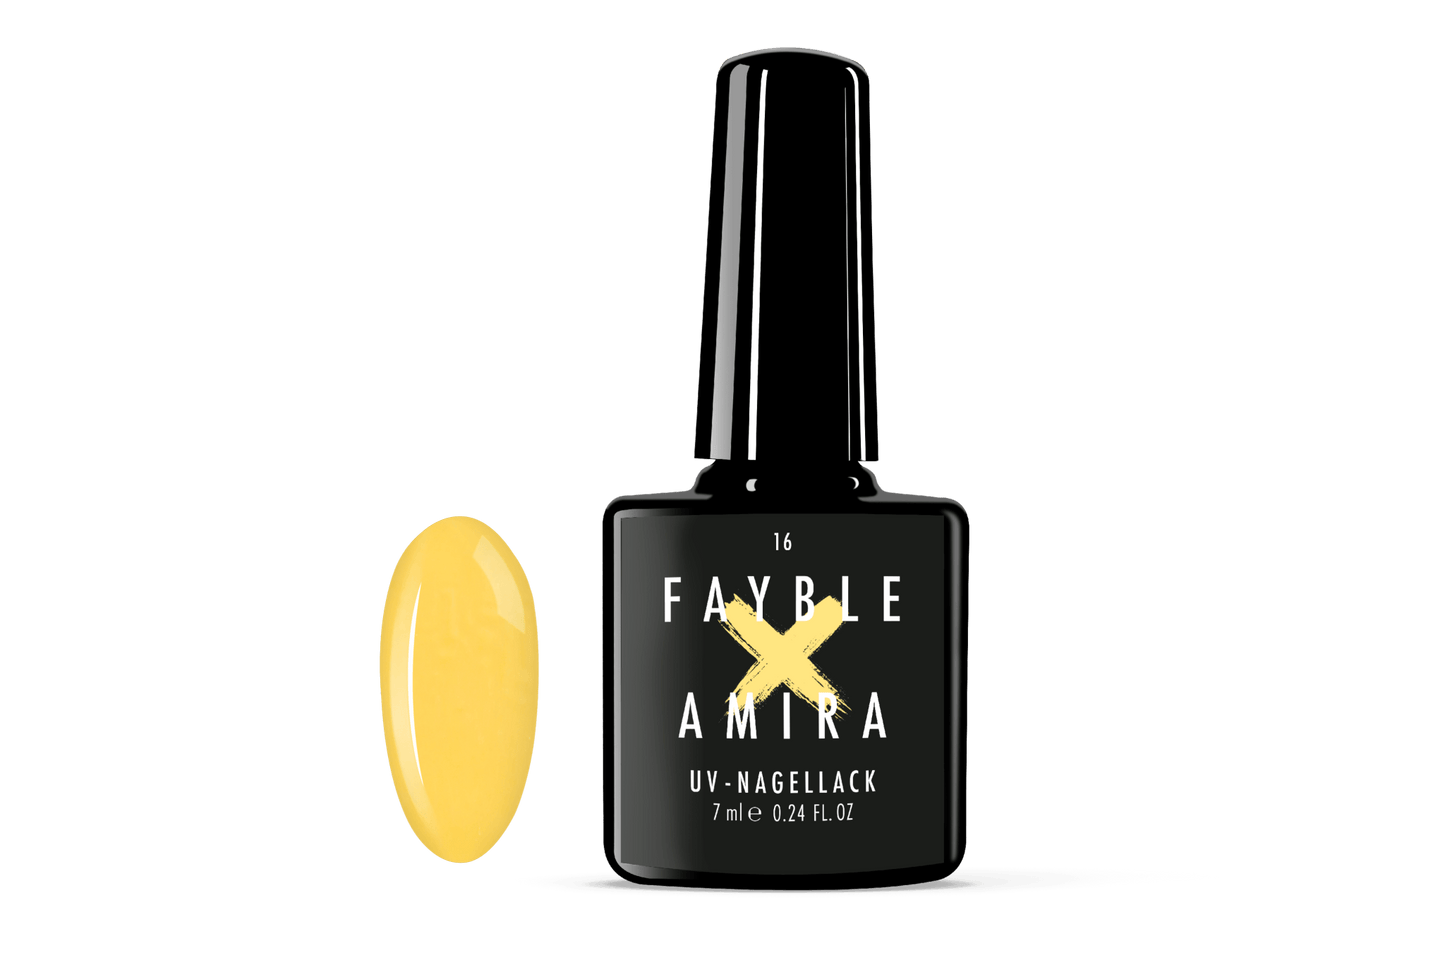 FAYBLE × AMIRA | SPECIAL EDITION BOX "Sommerfarben" - FAYBLE